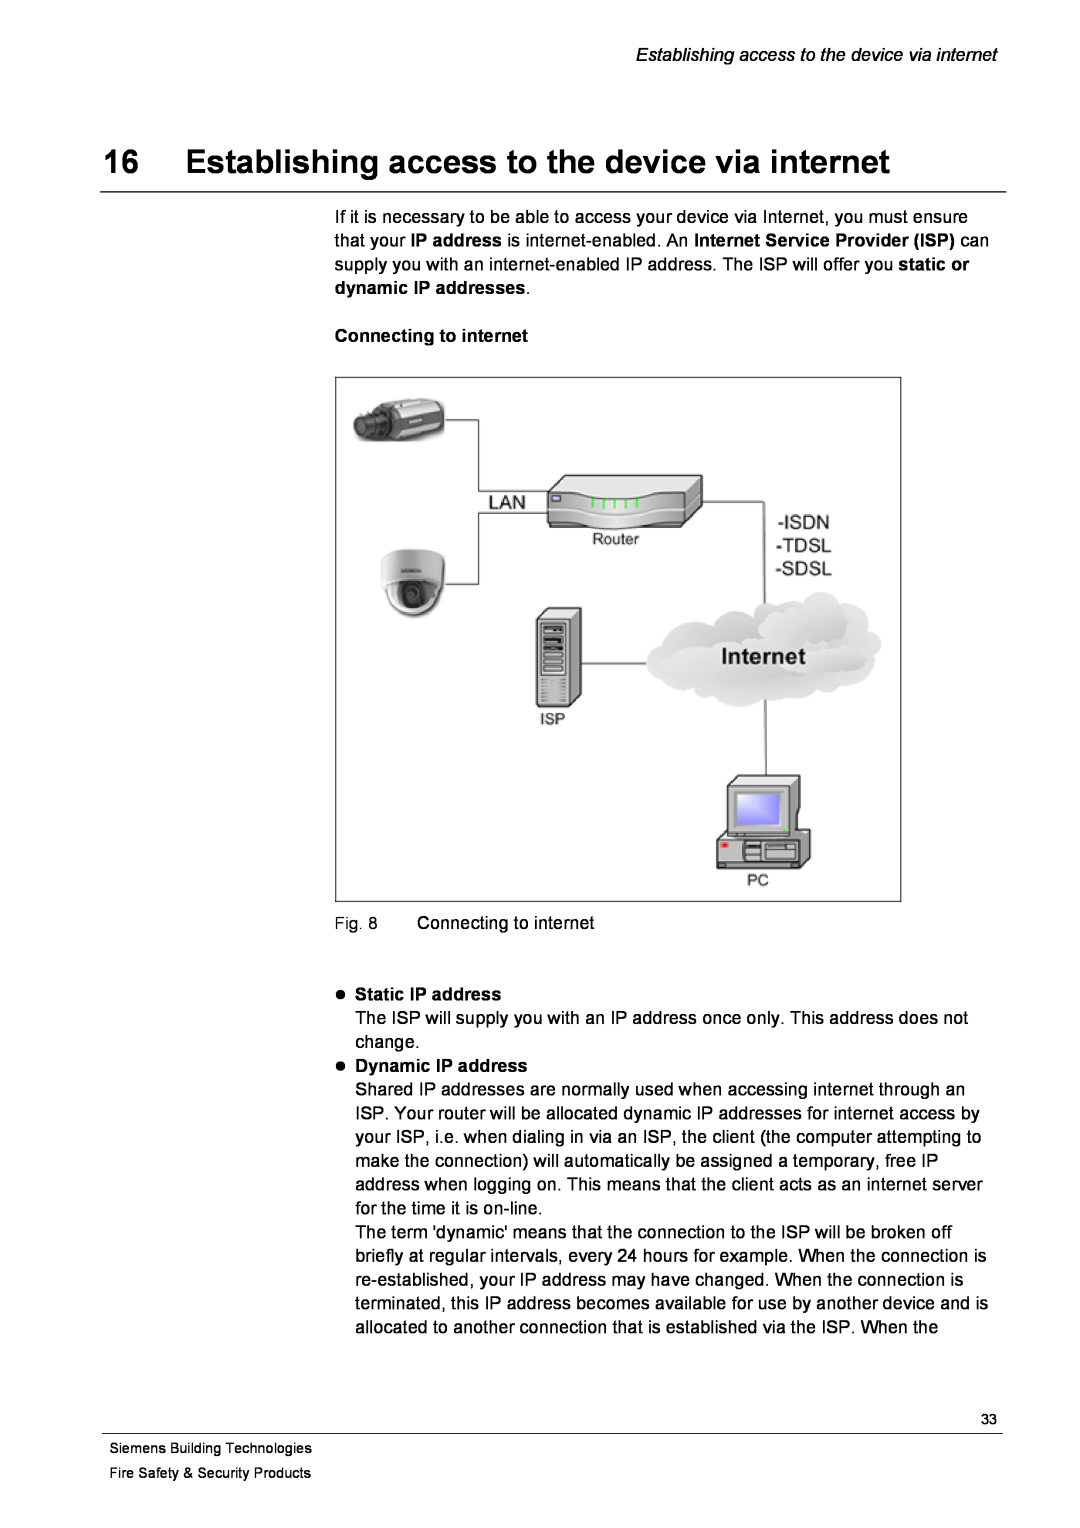 Siemens CFVA-IP user manual Establishing access to the device via internet, Connecting to internet, Static IP address 